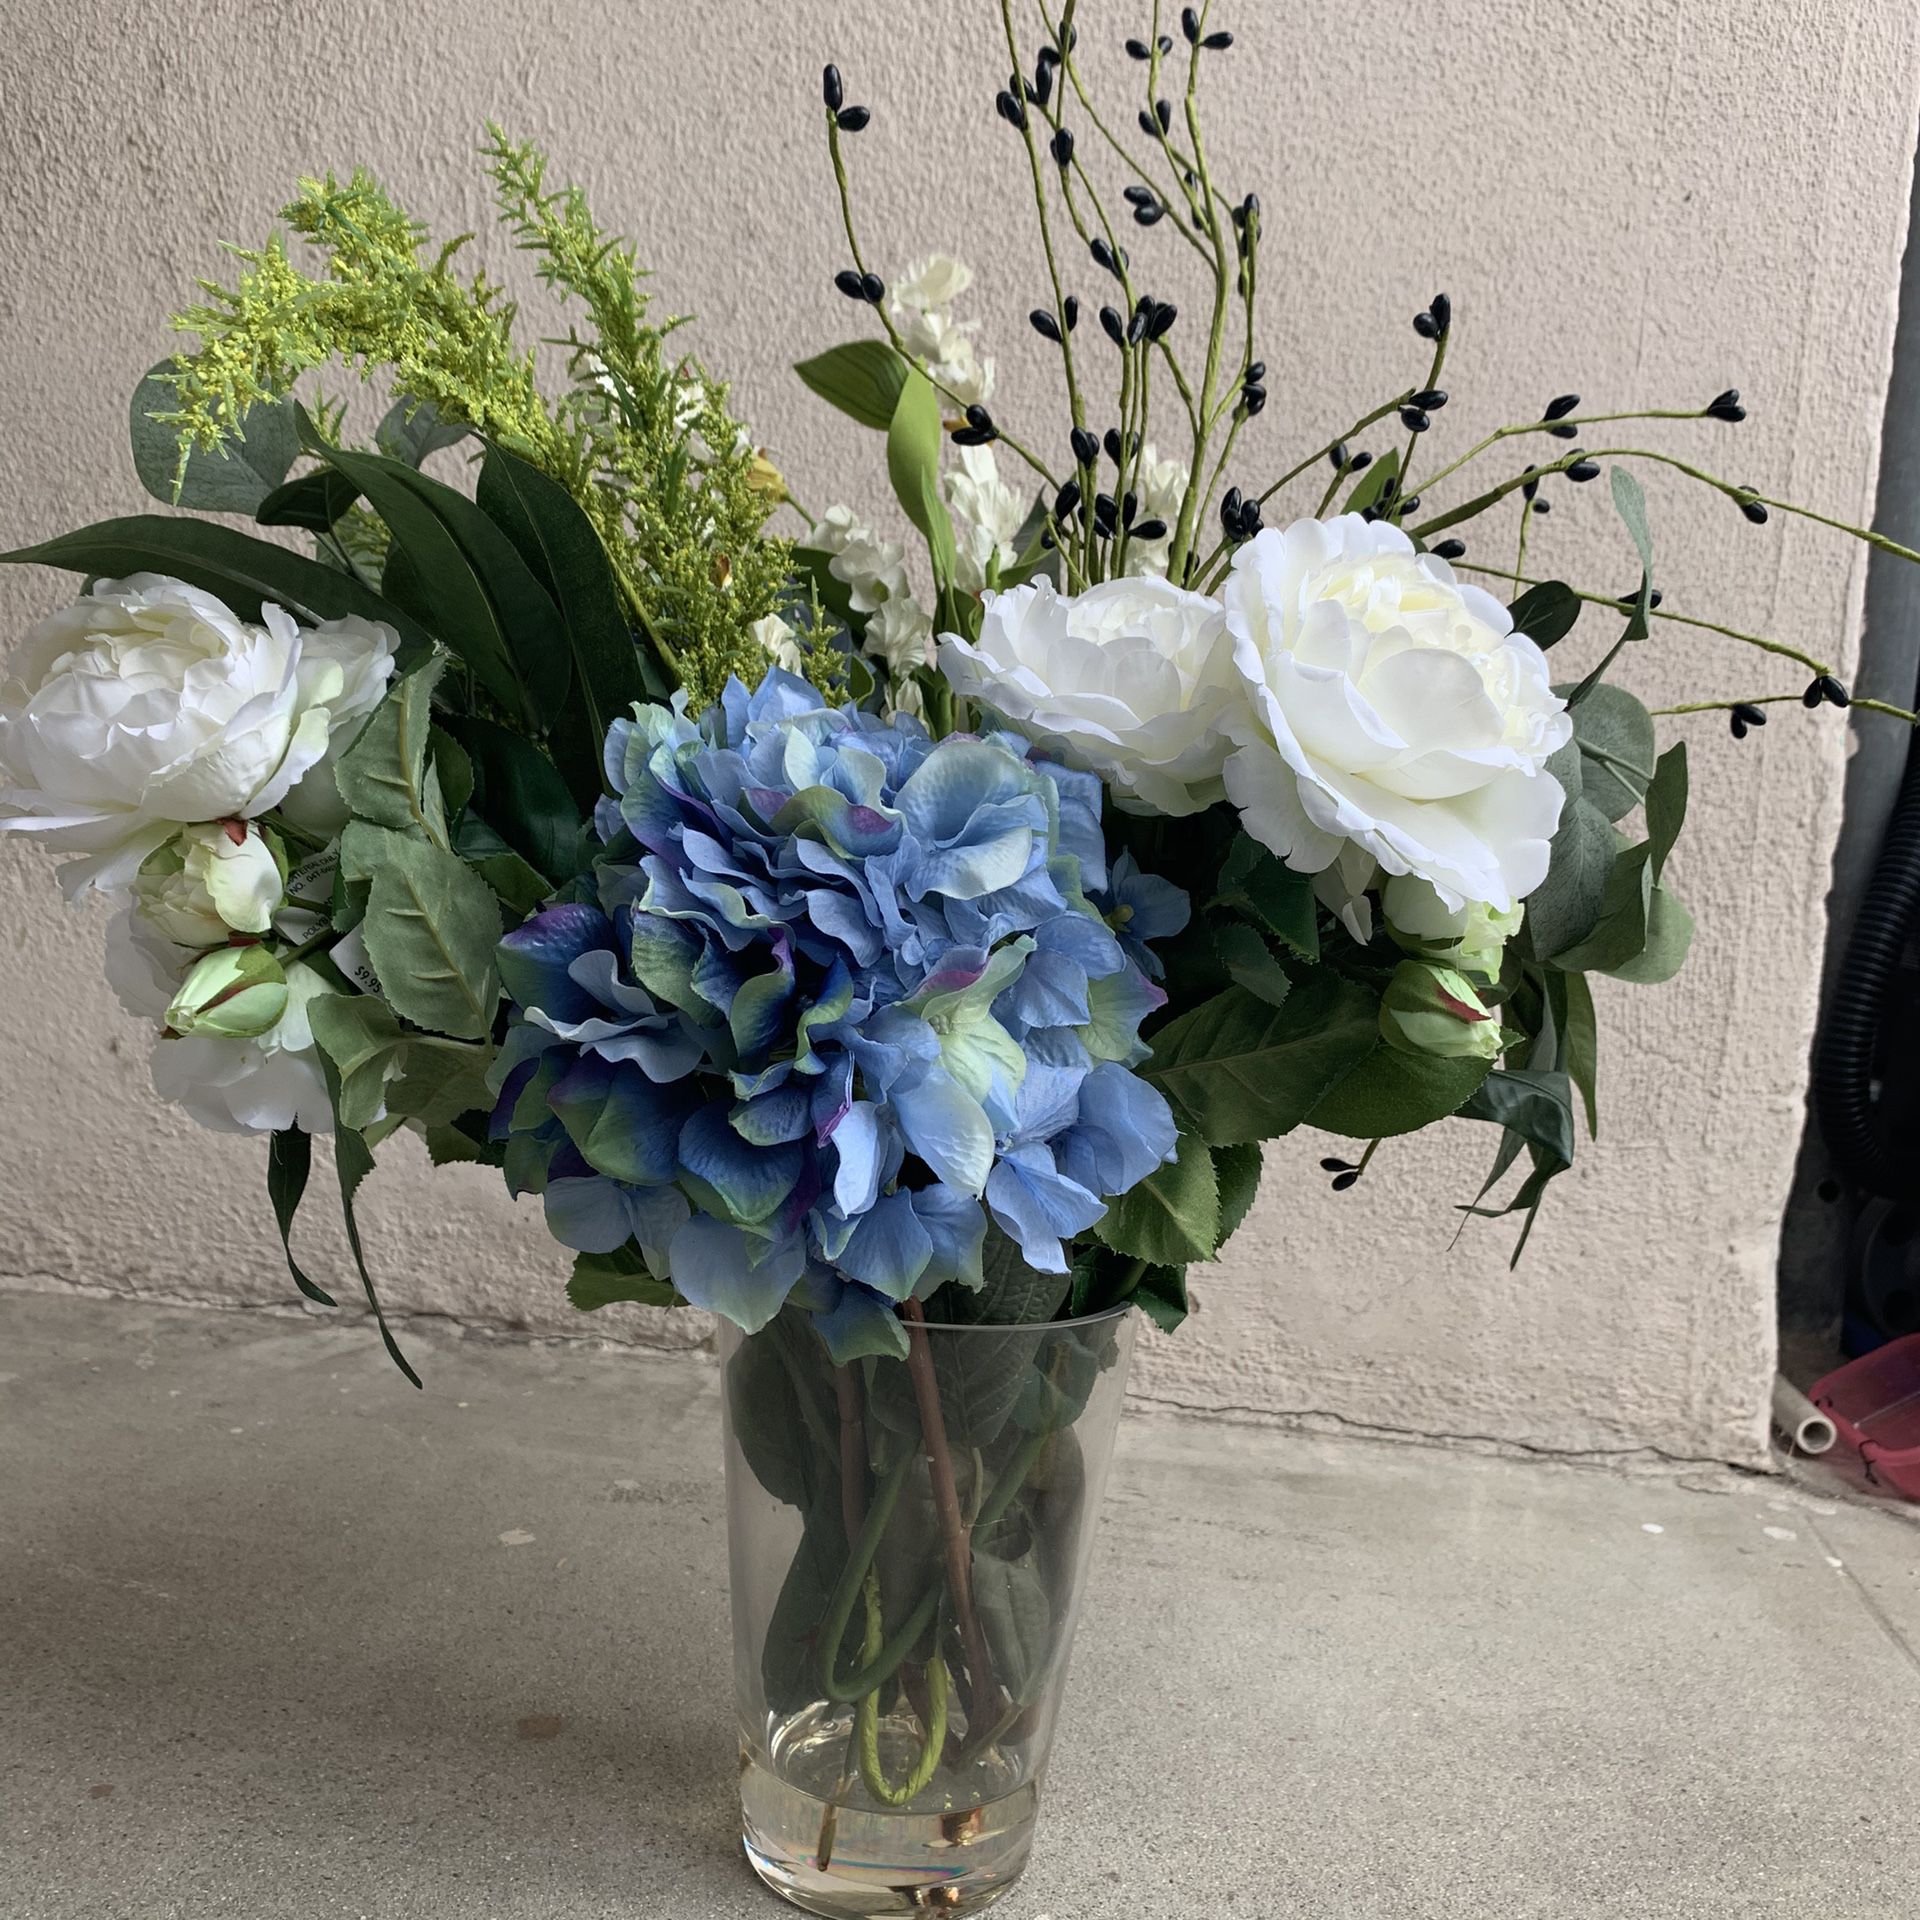 USED Artificial FLOWERS Arrangement in Vase